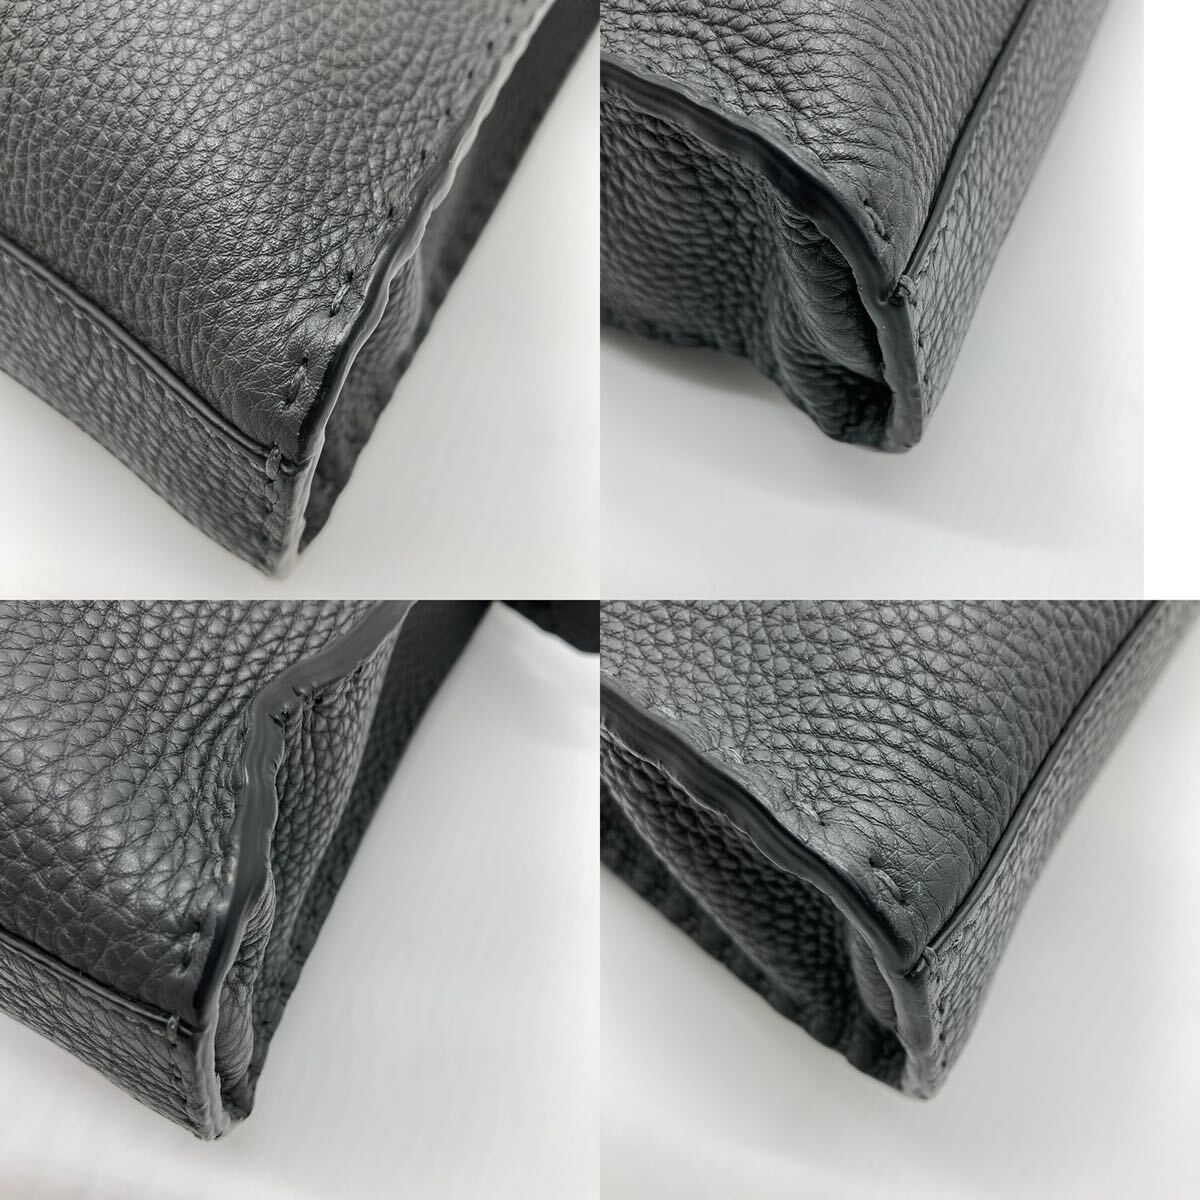 [ ultimate beautiful goods ]FENDI Fendi pi- Cub - selection rear Fit 2way business bag handbag shoulder bag shoulder .A4 gray leather 